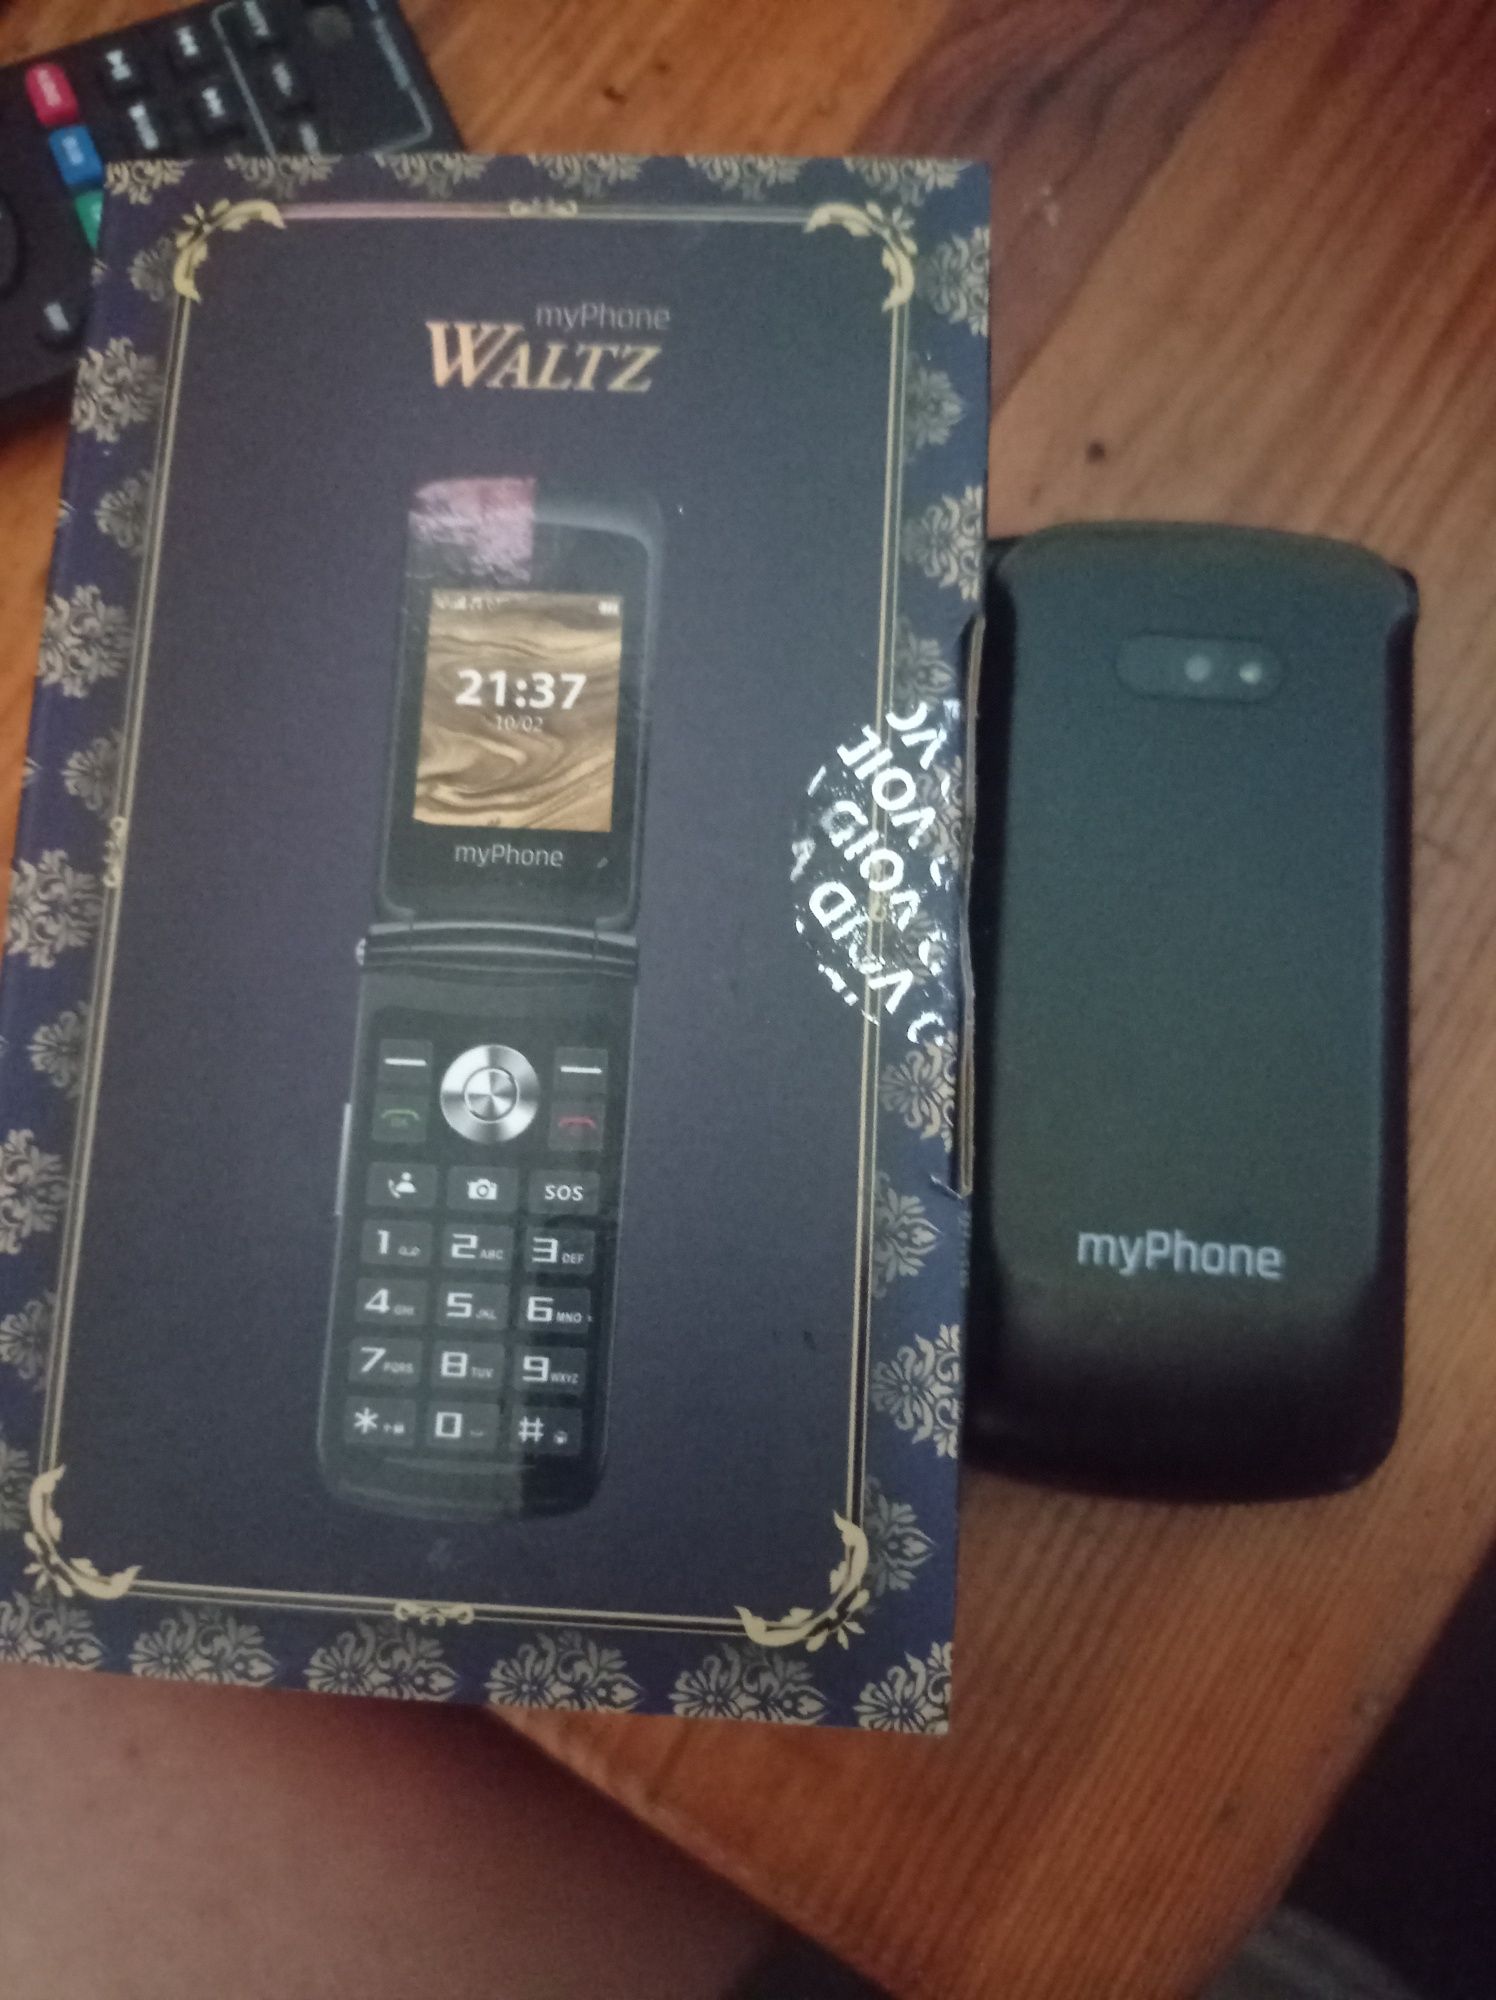 myPhone waltz telefon